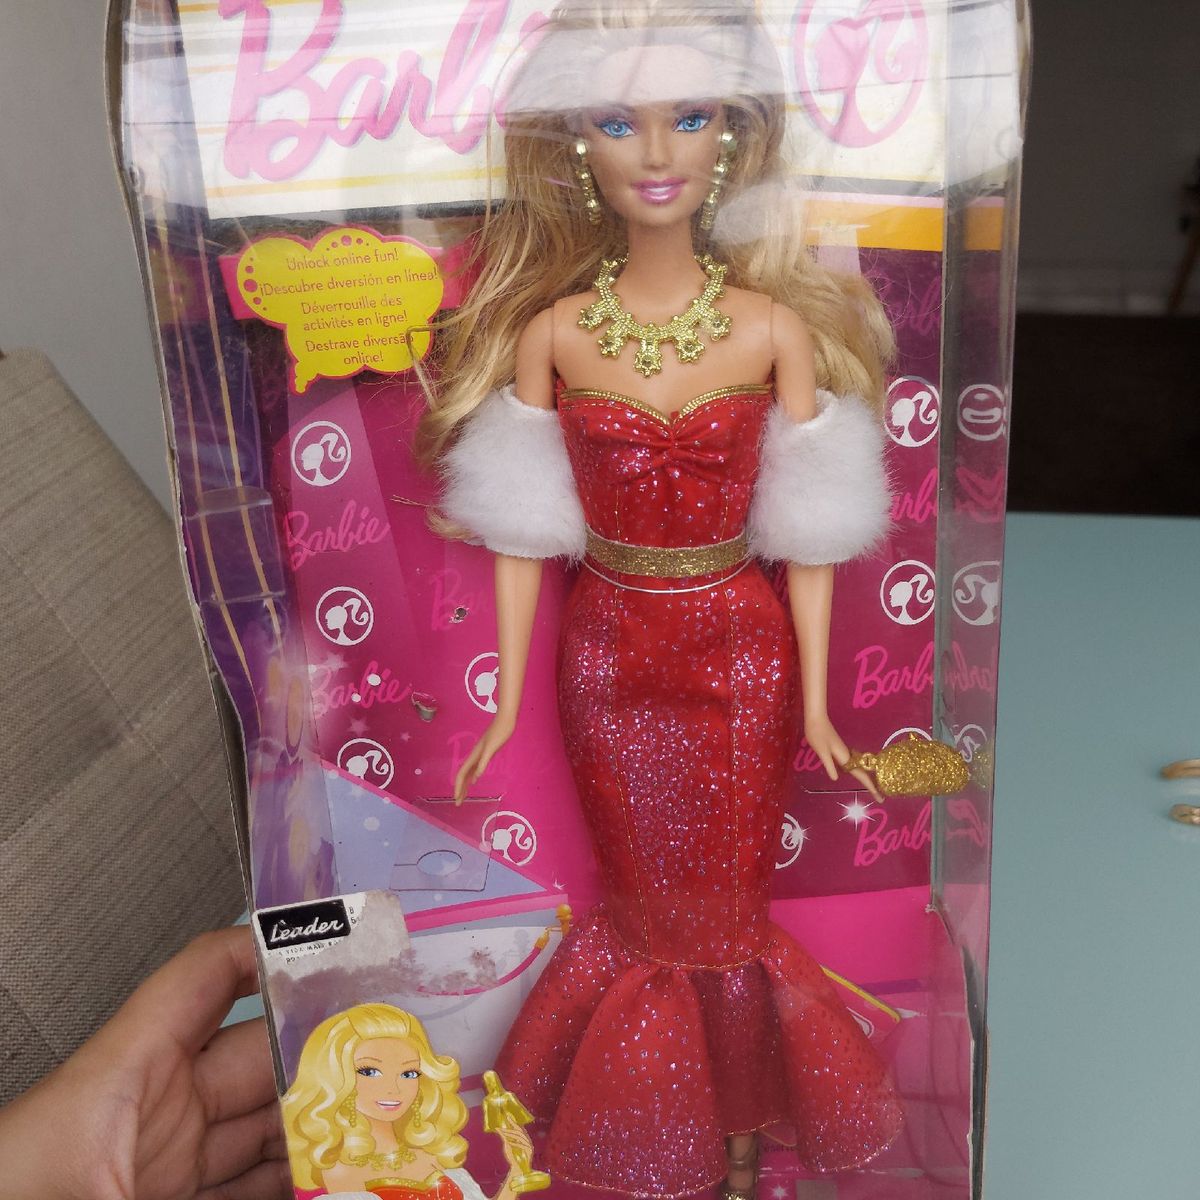 Boneca Barbie Quero Ser Atriz de Cinema - MATTEL - Loja de mimos-presentes